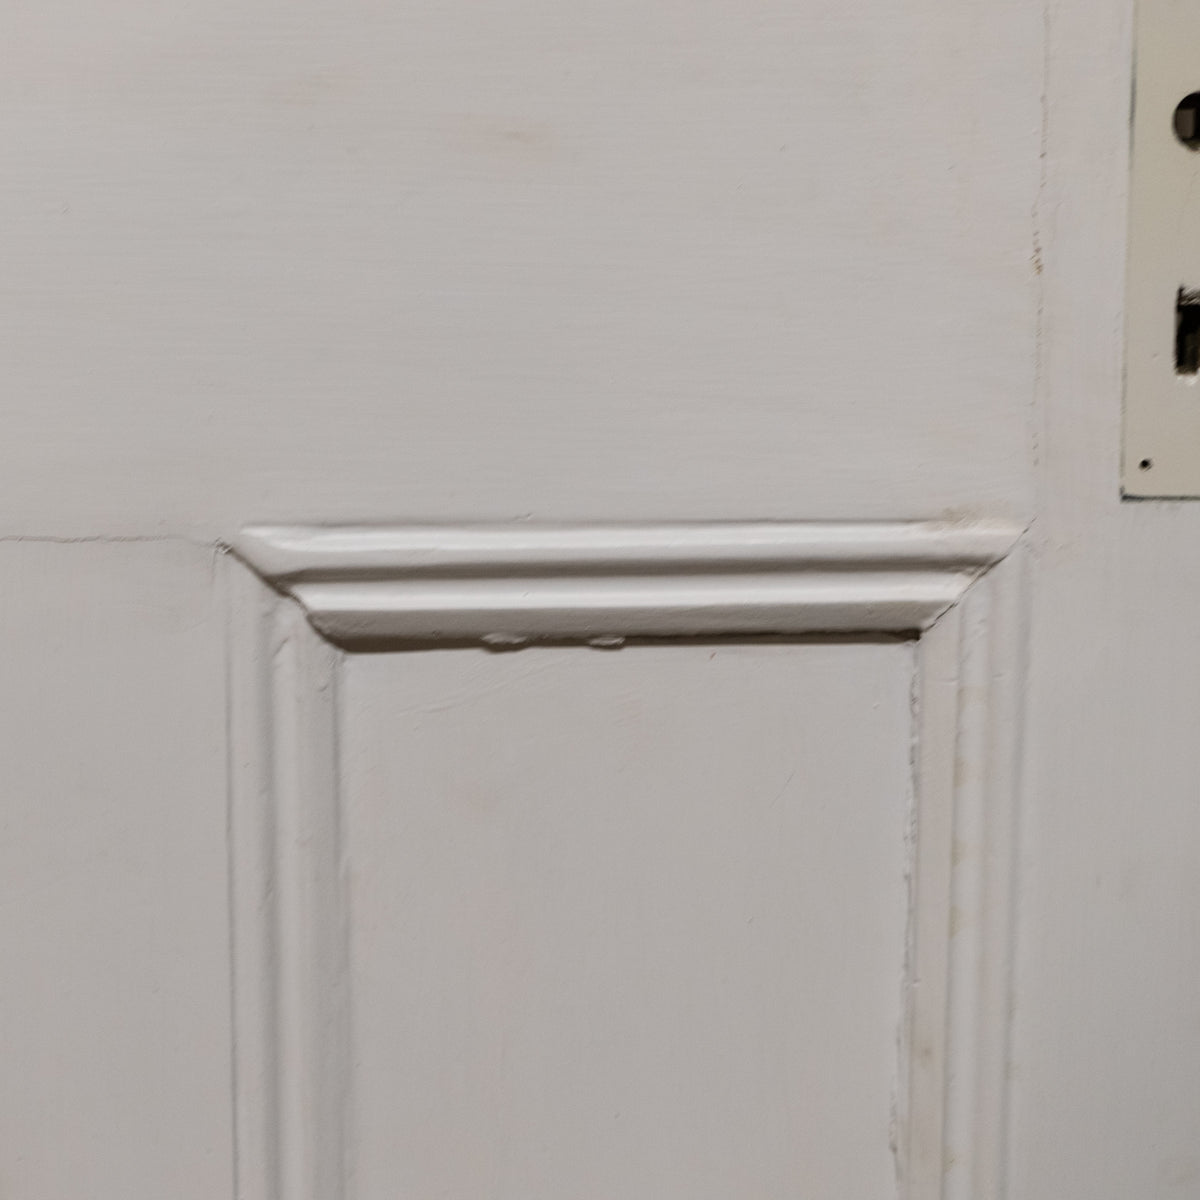 Reclaimed Antique Victorian 4 Panel Door - 198cm x 76cm | The Architectural Forum